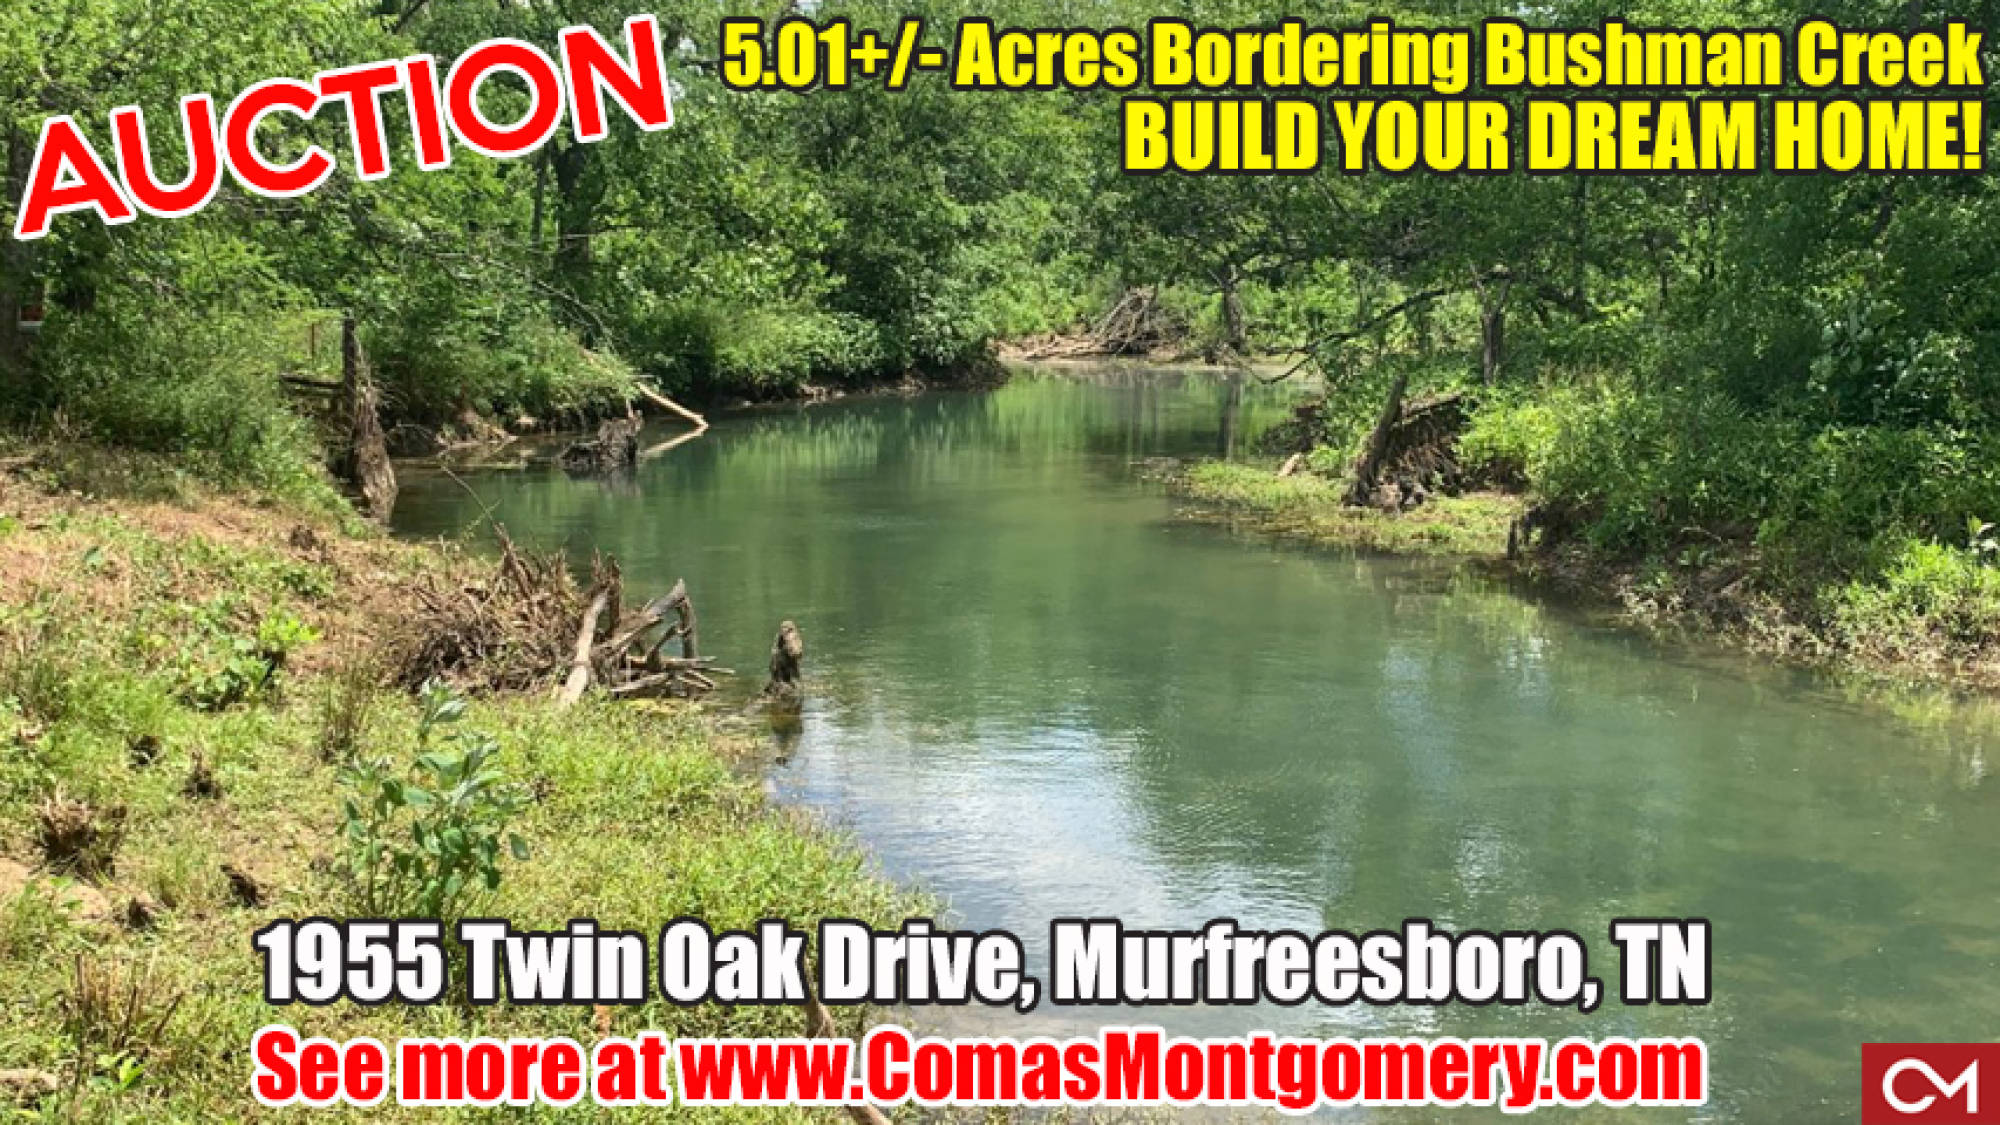 Land, For Sale, Real Estate, Acres, Bushman, Creek, Build, Home, House, Soil Site, Murfreesboro, Comas